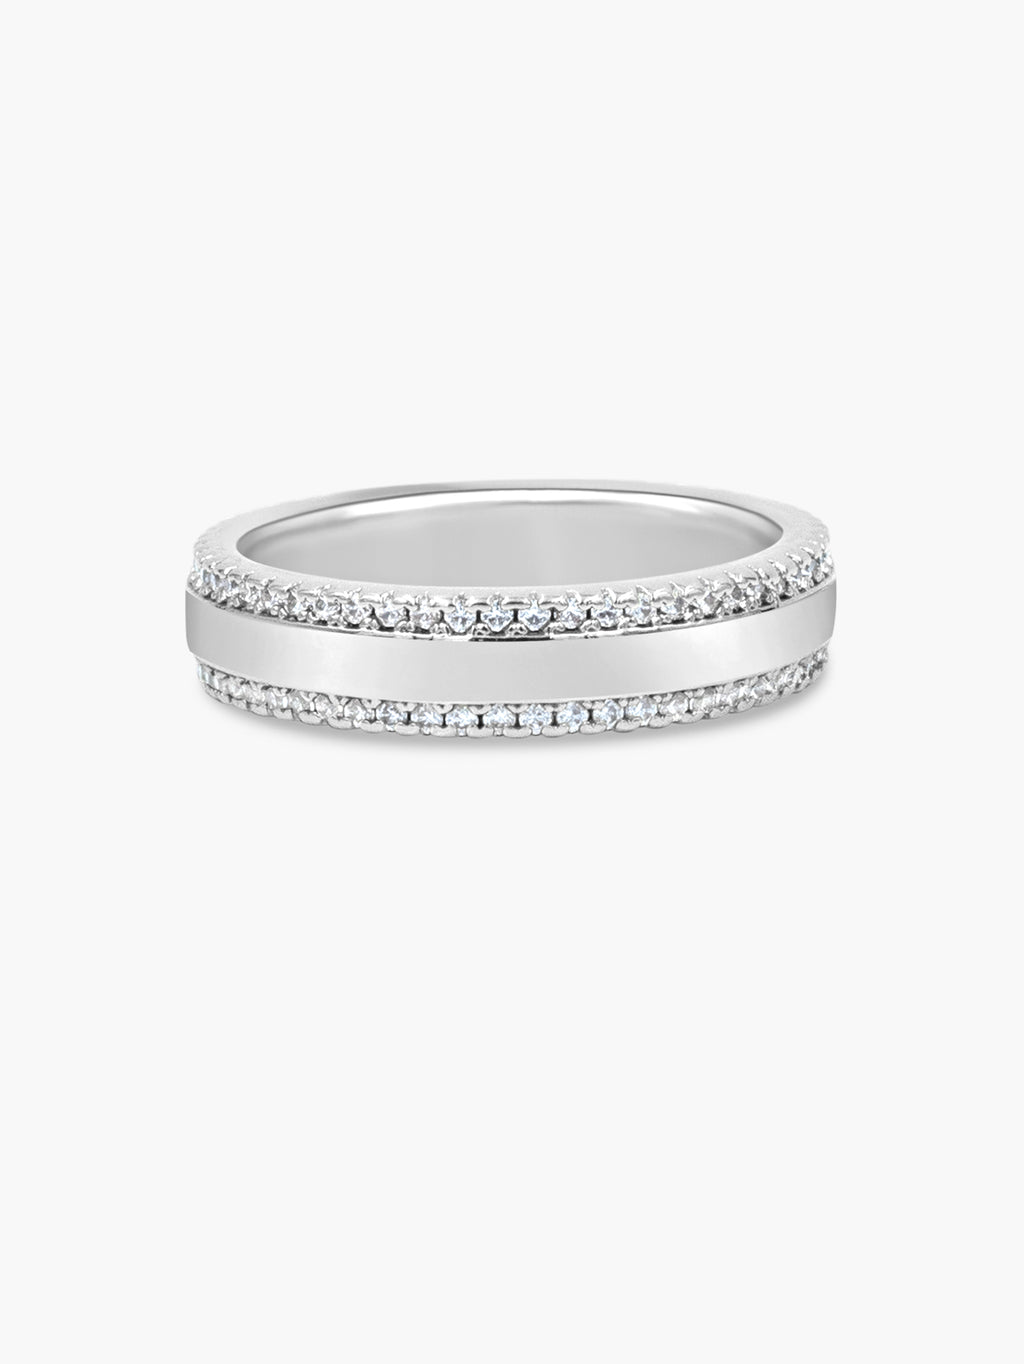 silver eternity ring